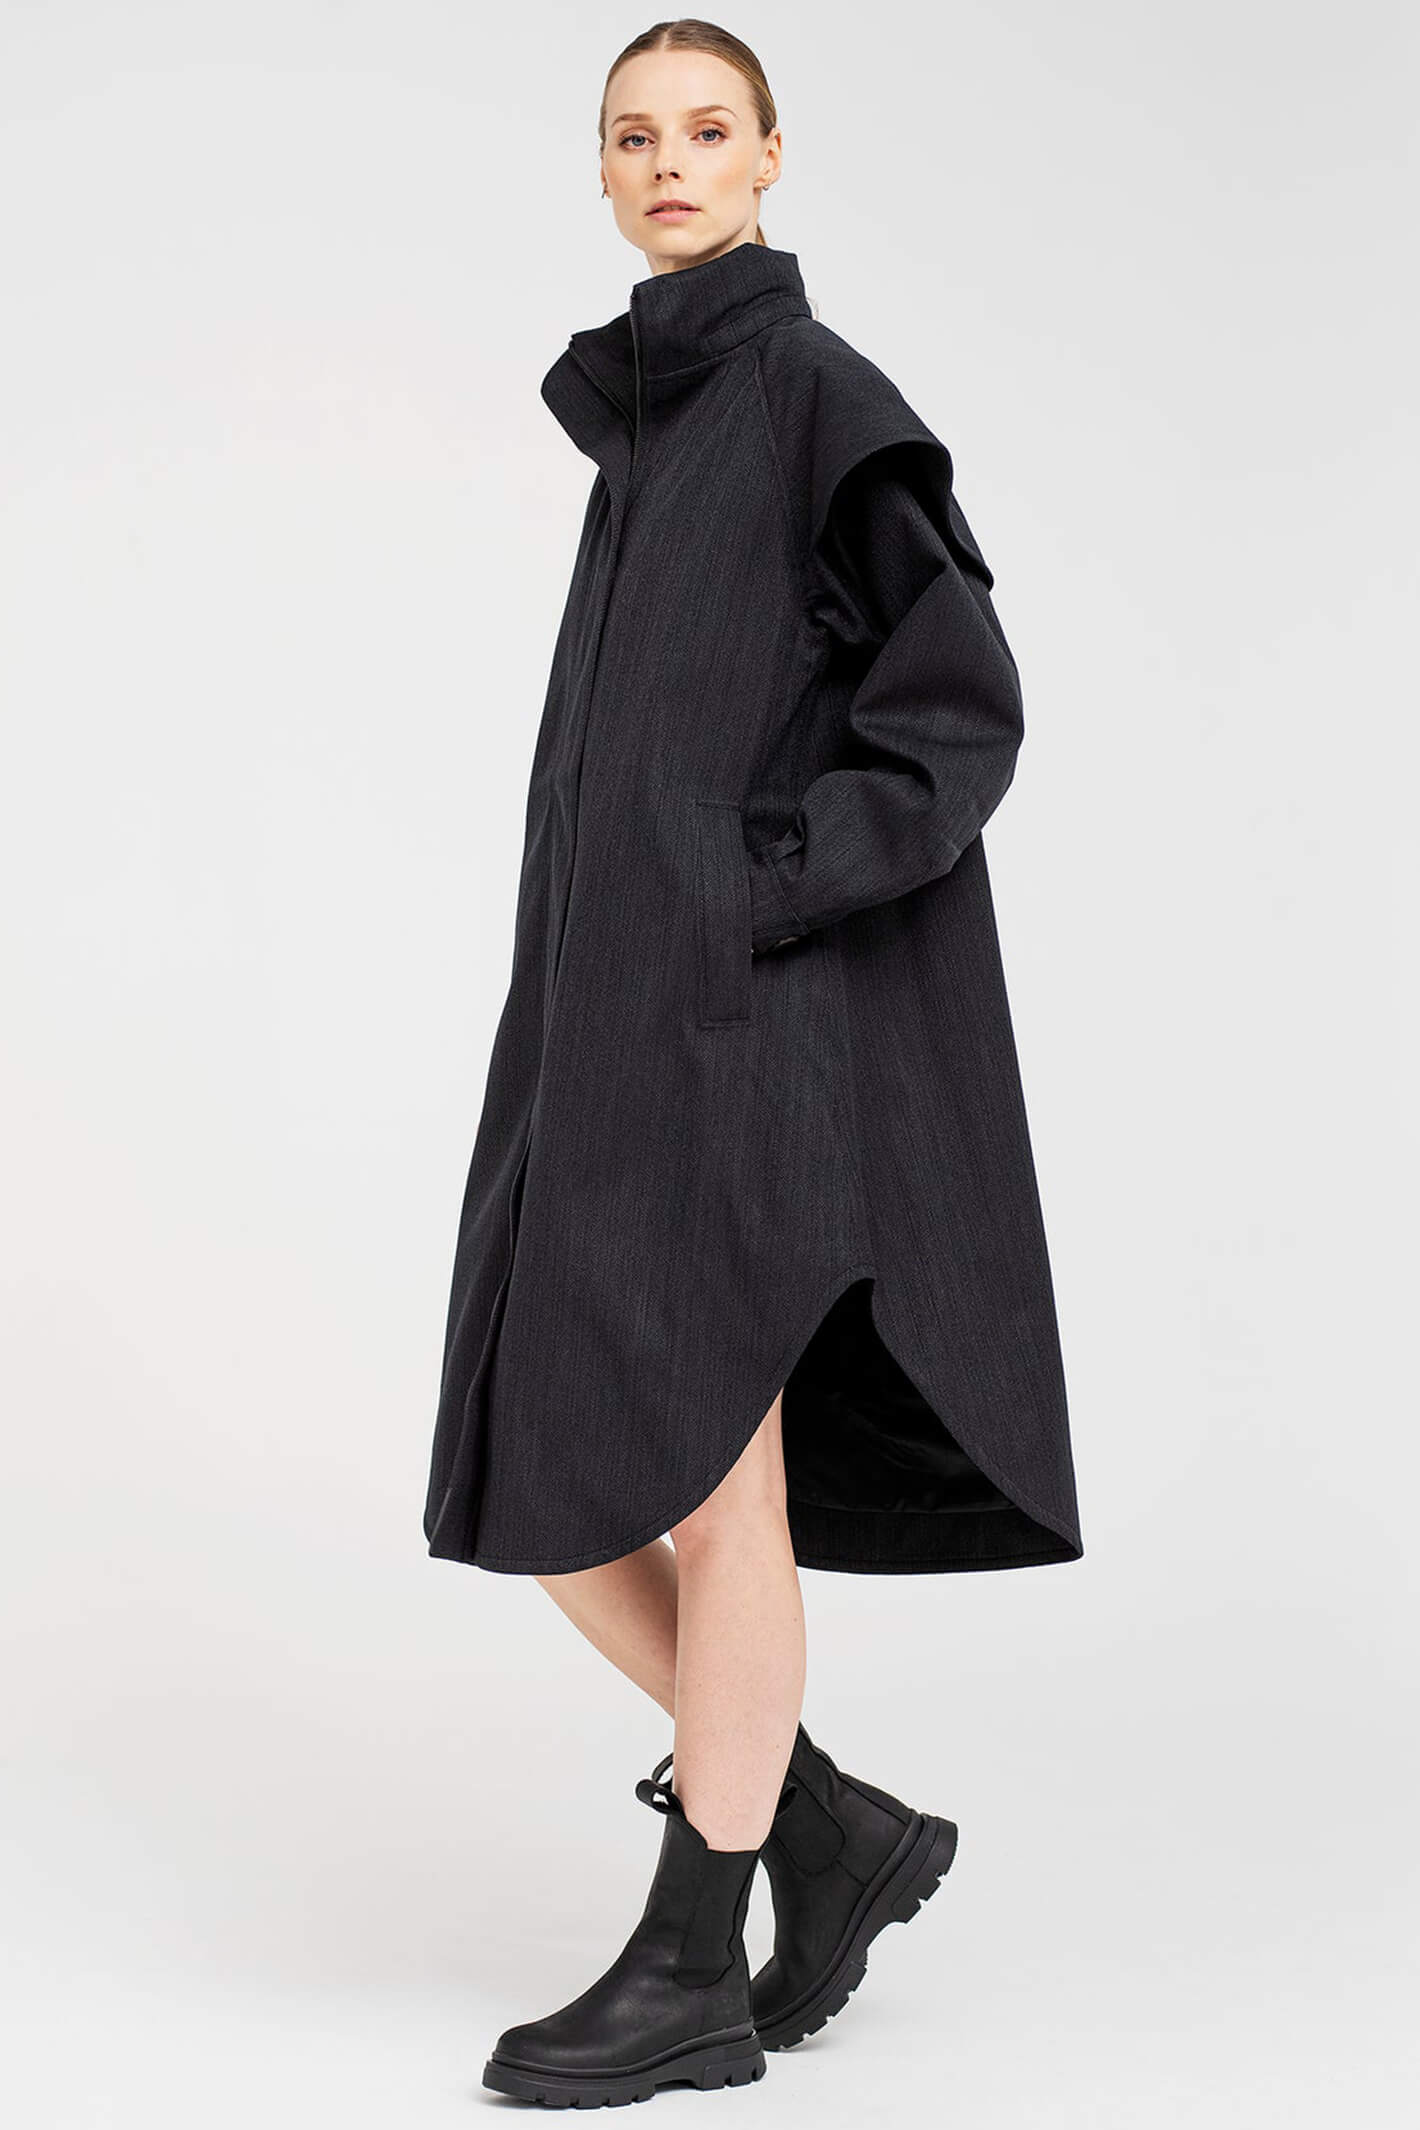 BRGN 15034L2 097 Black Tweed Tyfon Waterproof Raincoat